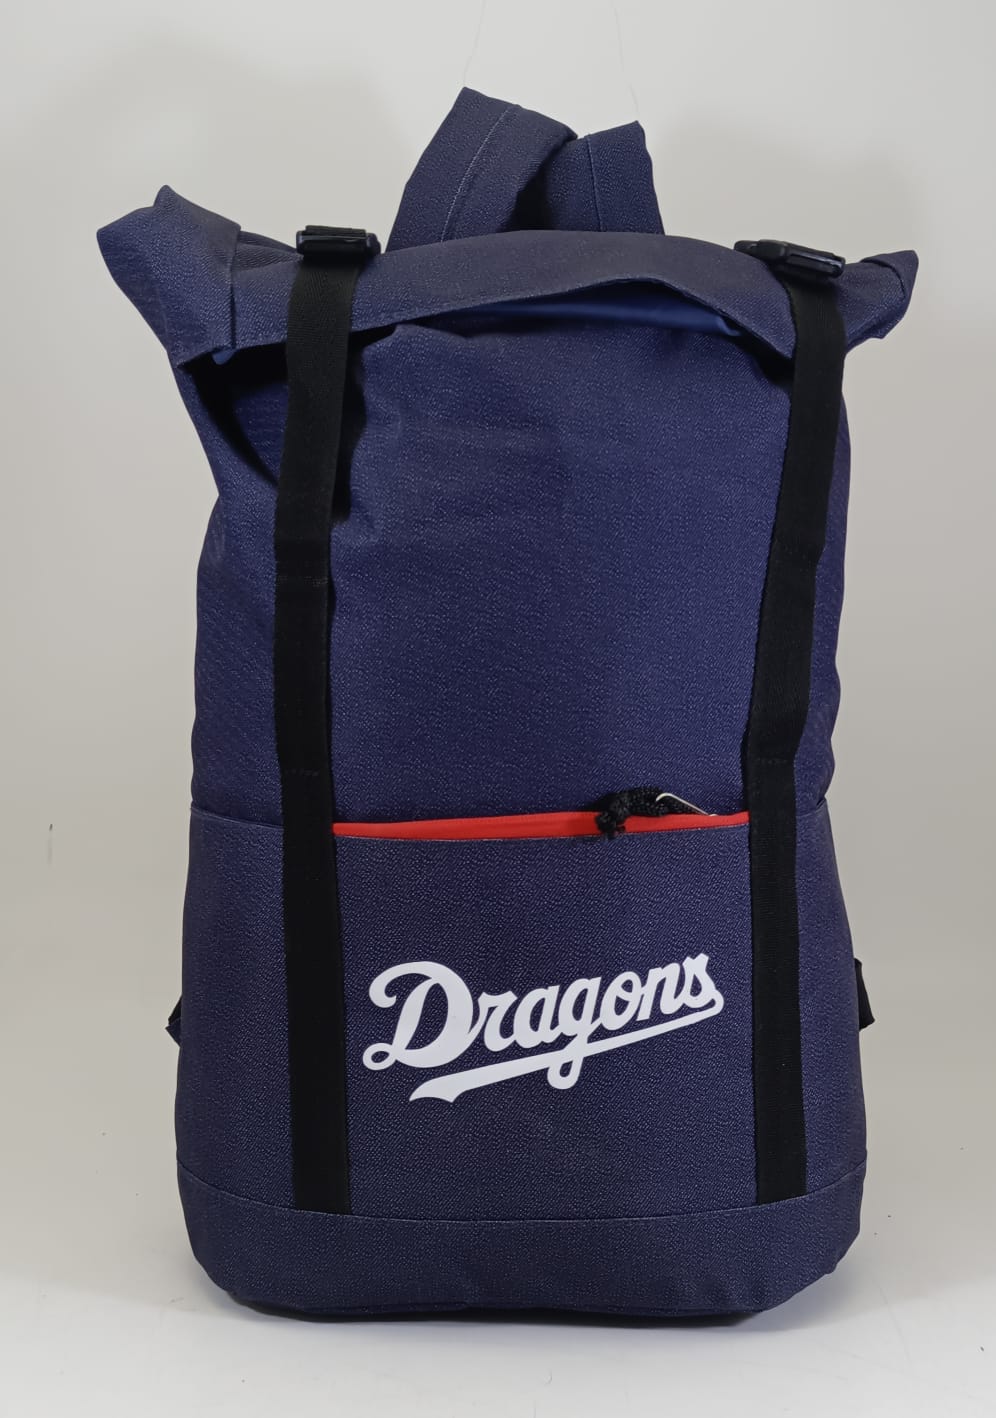 Dragons School Bag